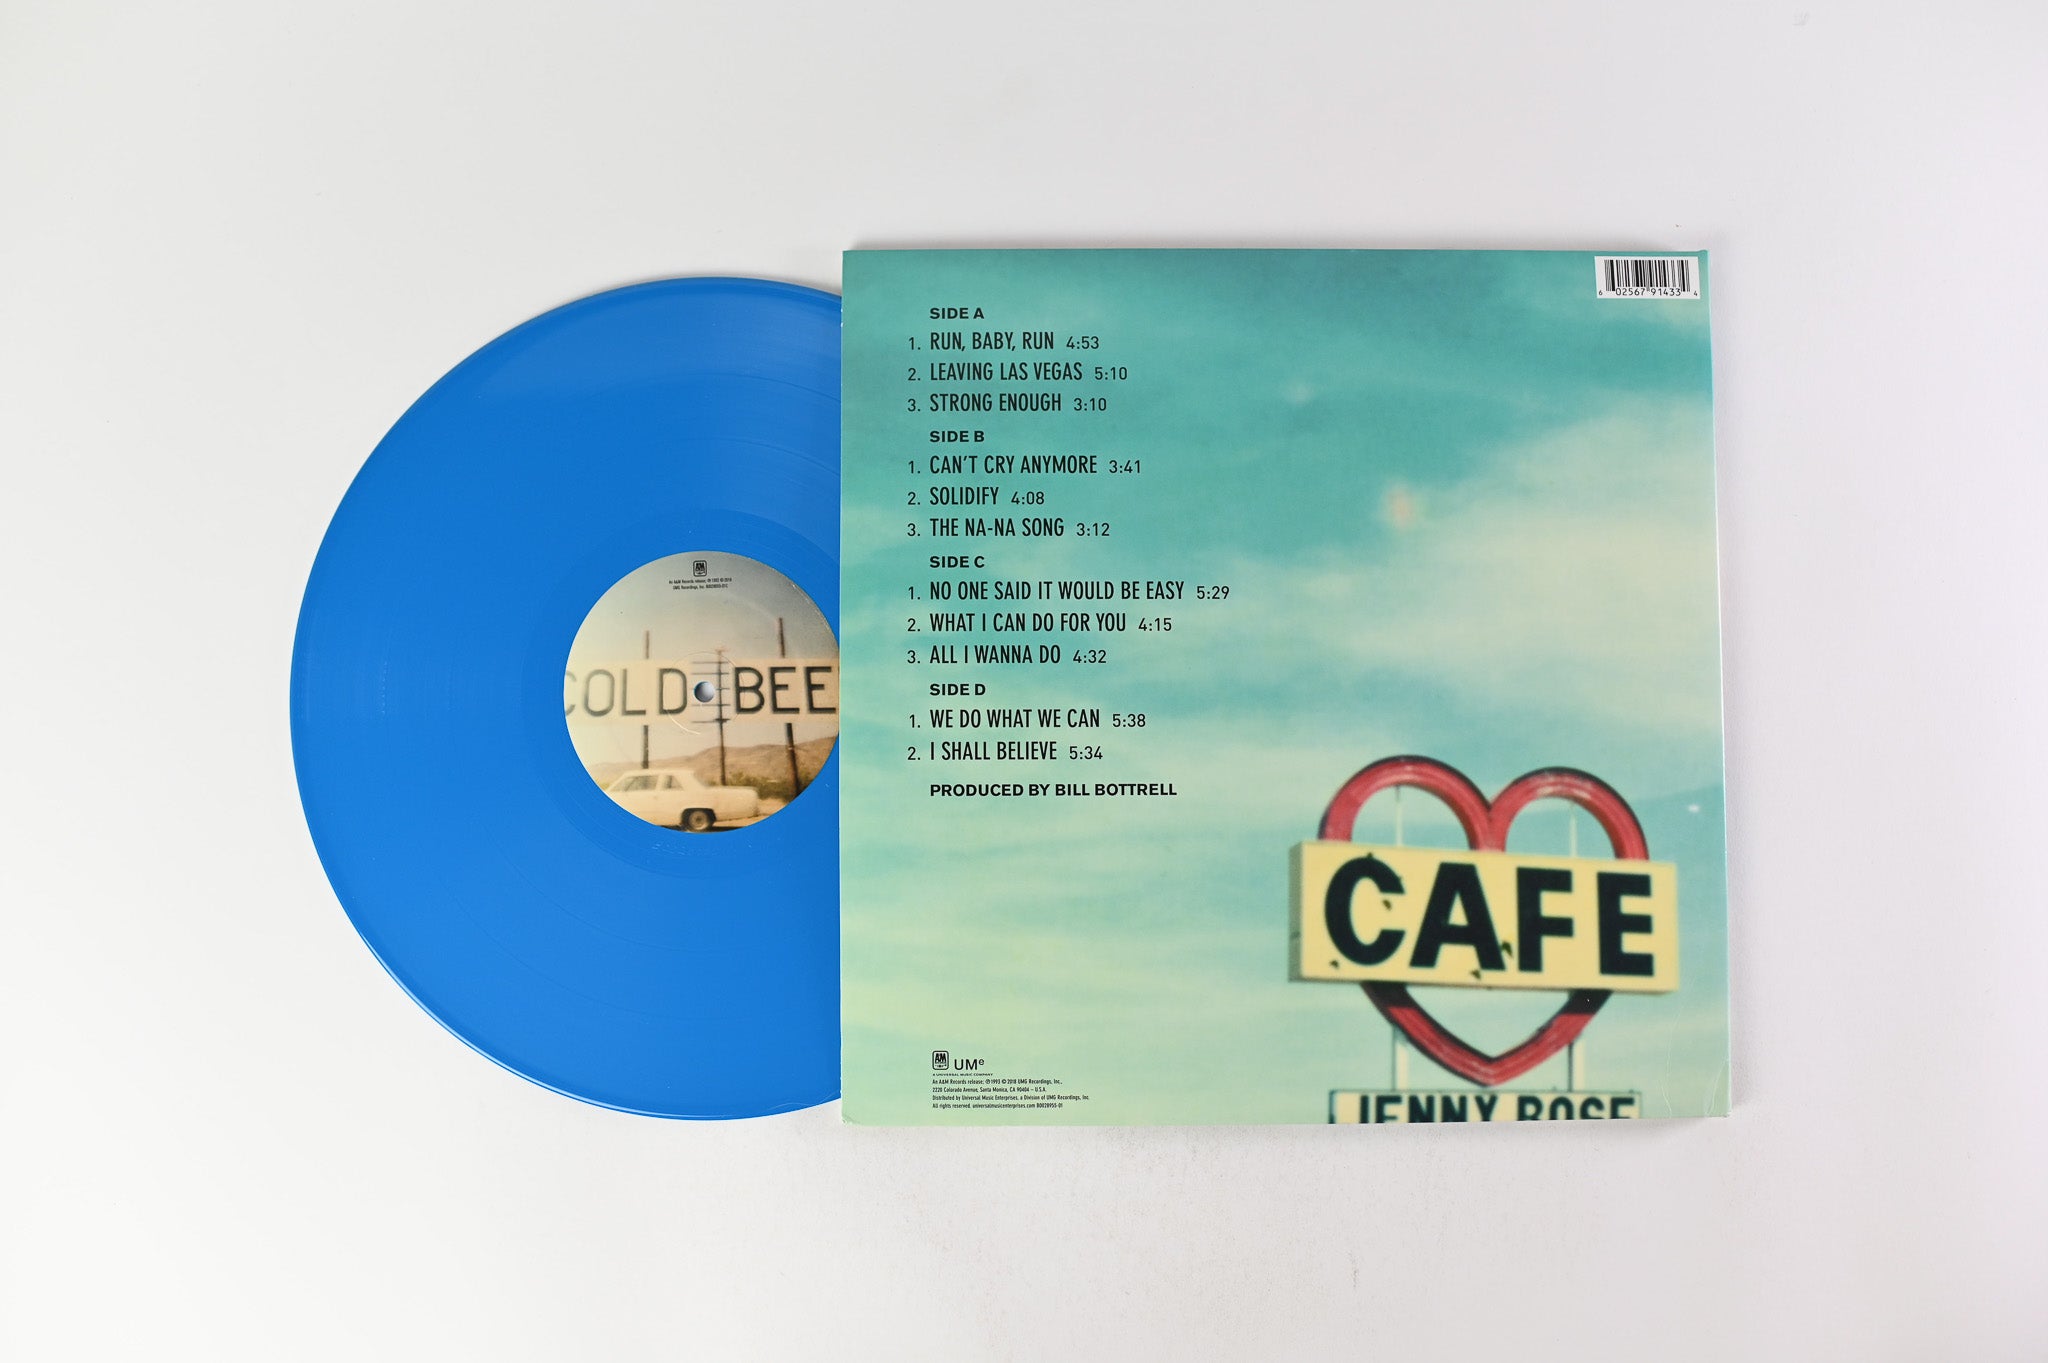 Sheryl Crow - Tuesday Night Music Club on A&M Records / UMe - Blue Vinyl